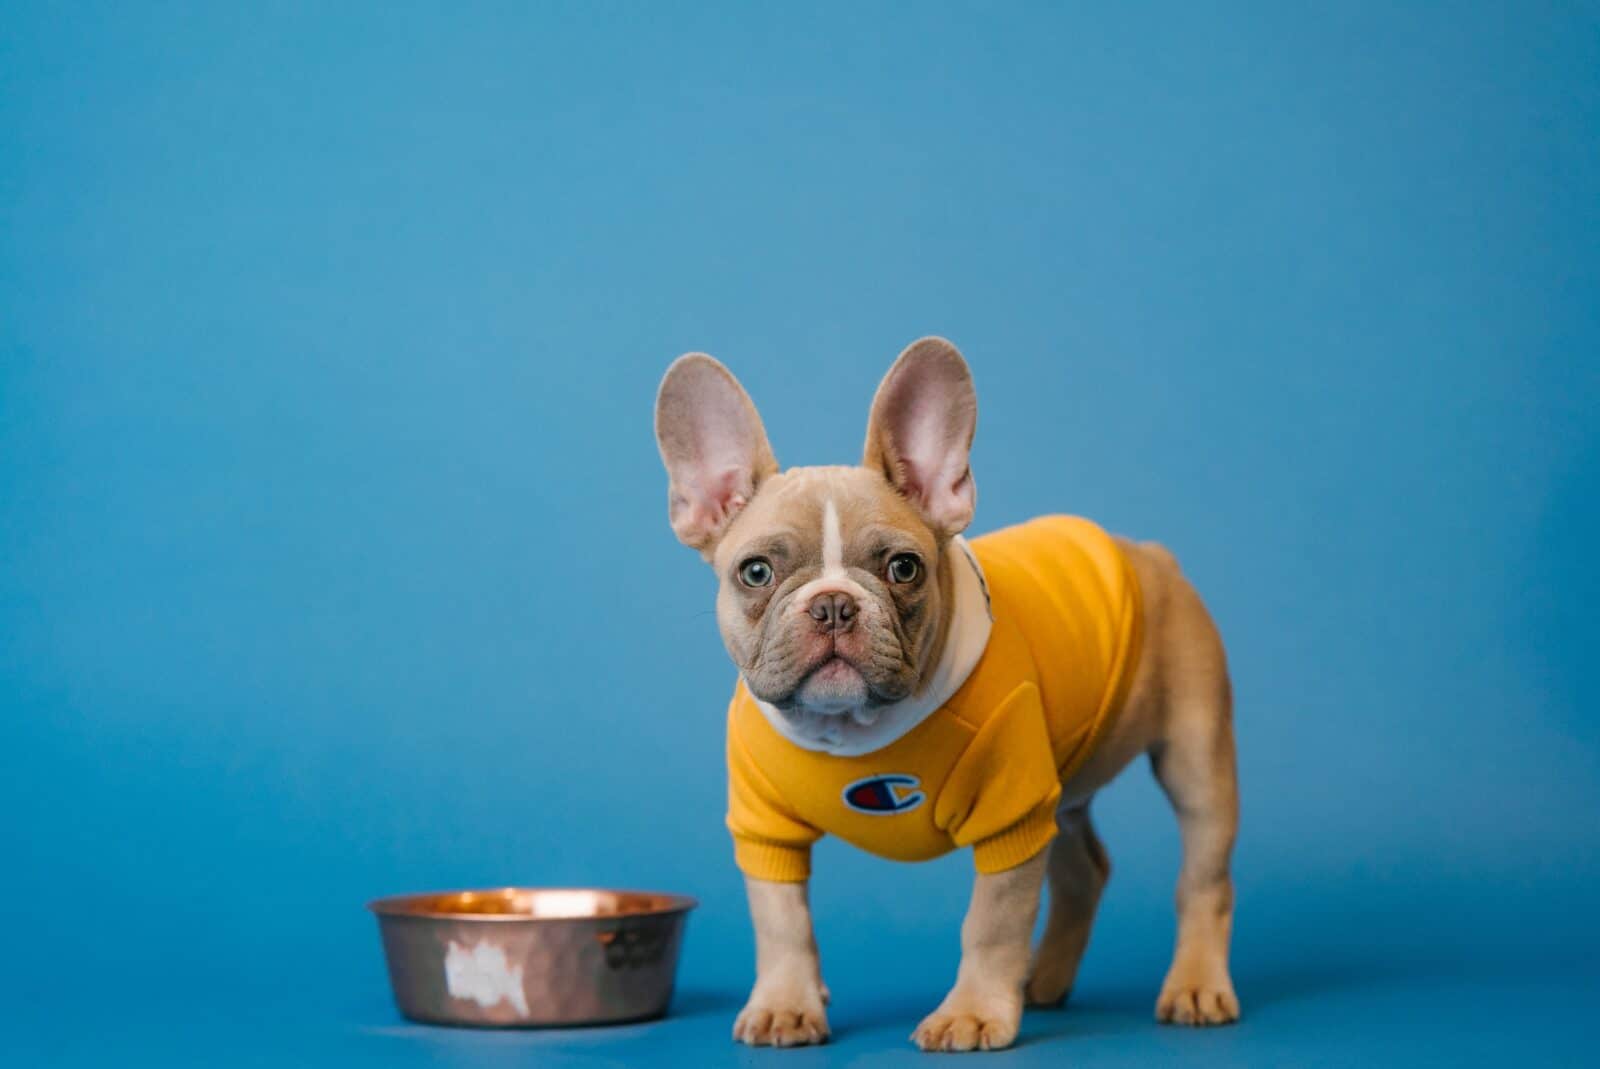 Bulldog in yellow shirt against a blue backdrop.